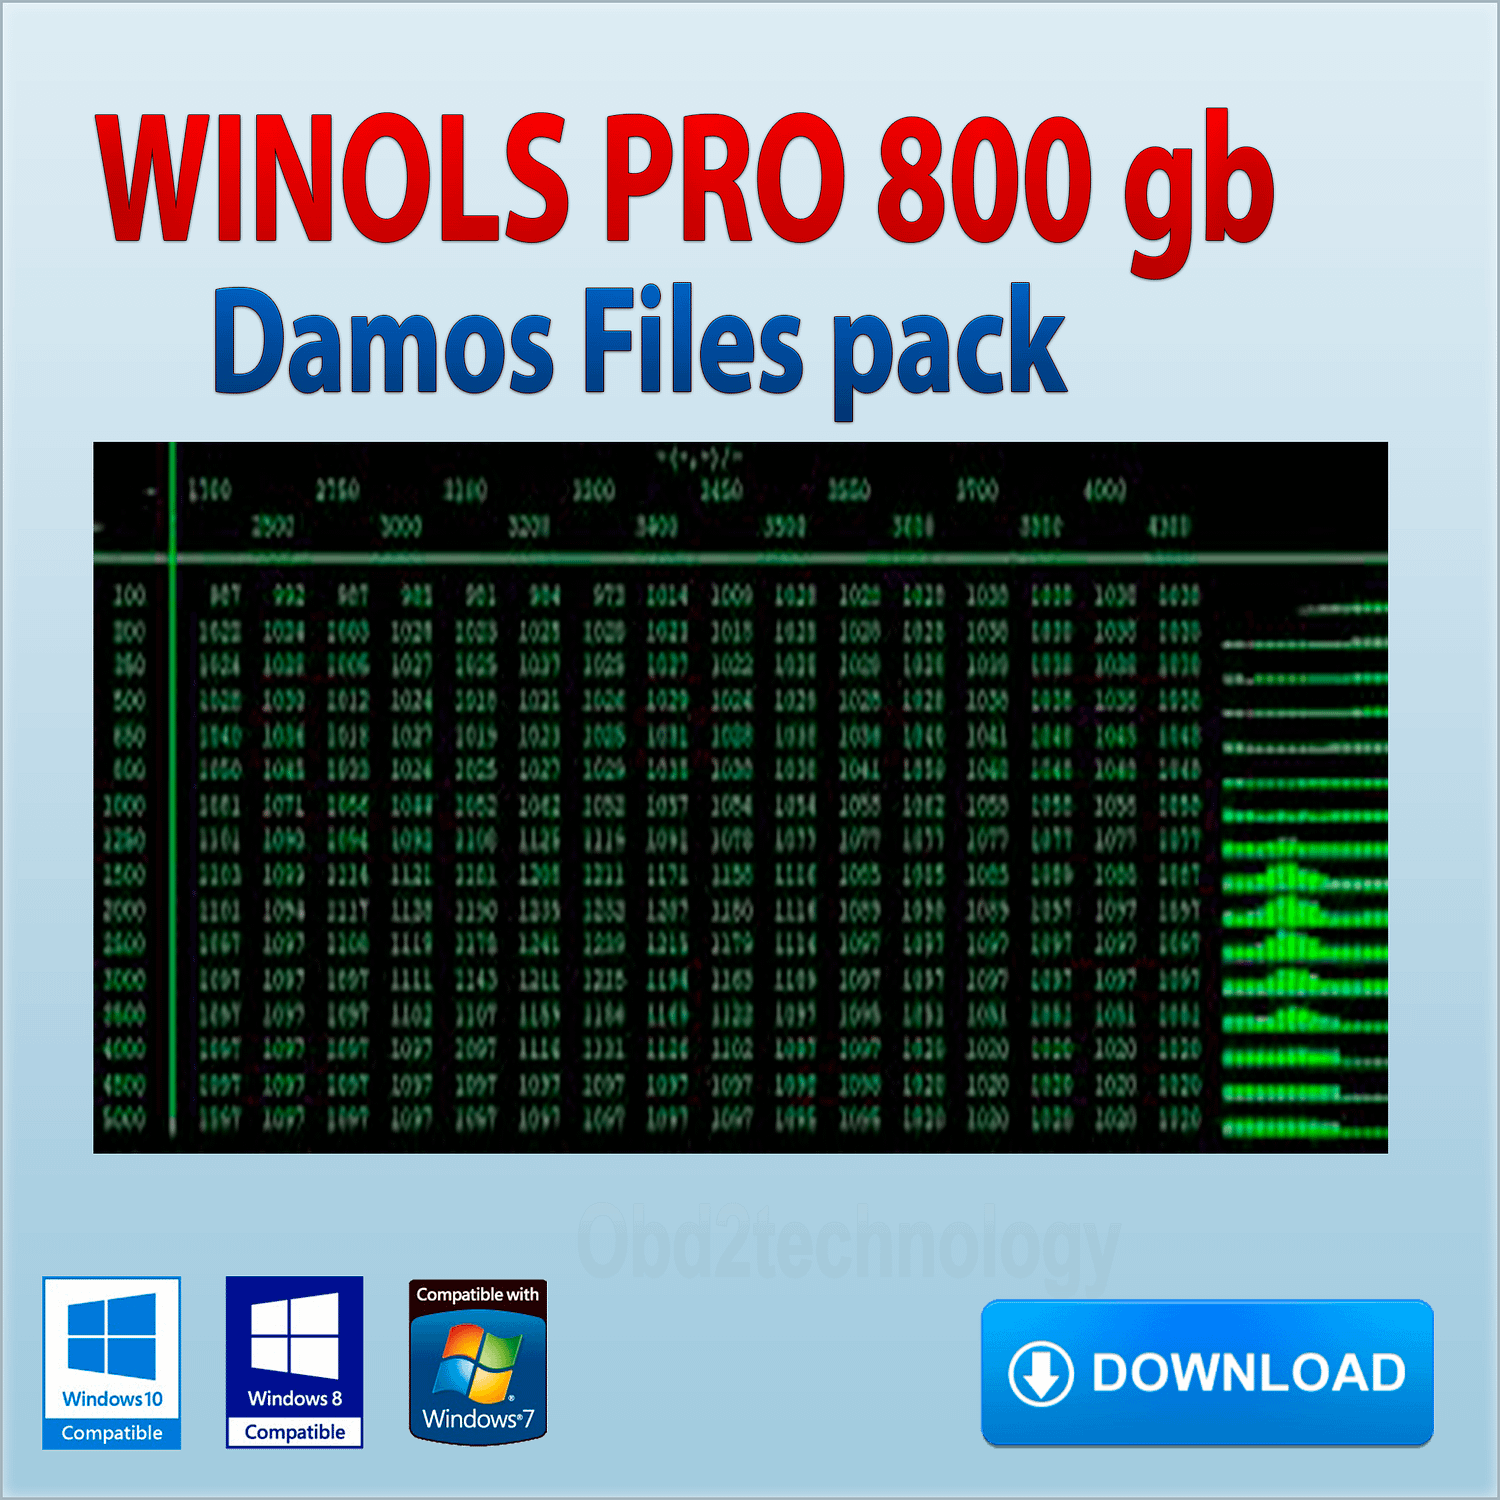 winols pro tunning egr dpf cars/trucks 800gb damos files instant download